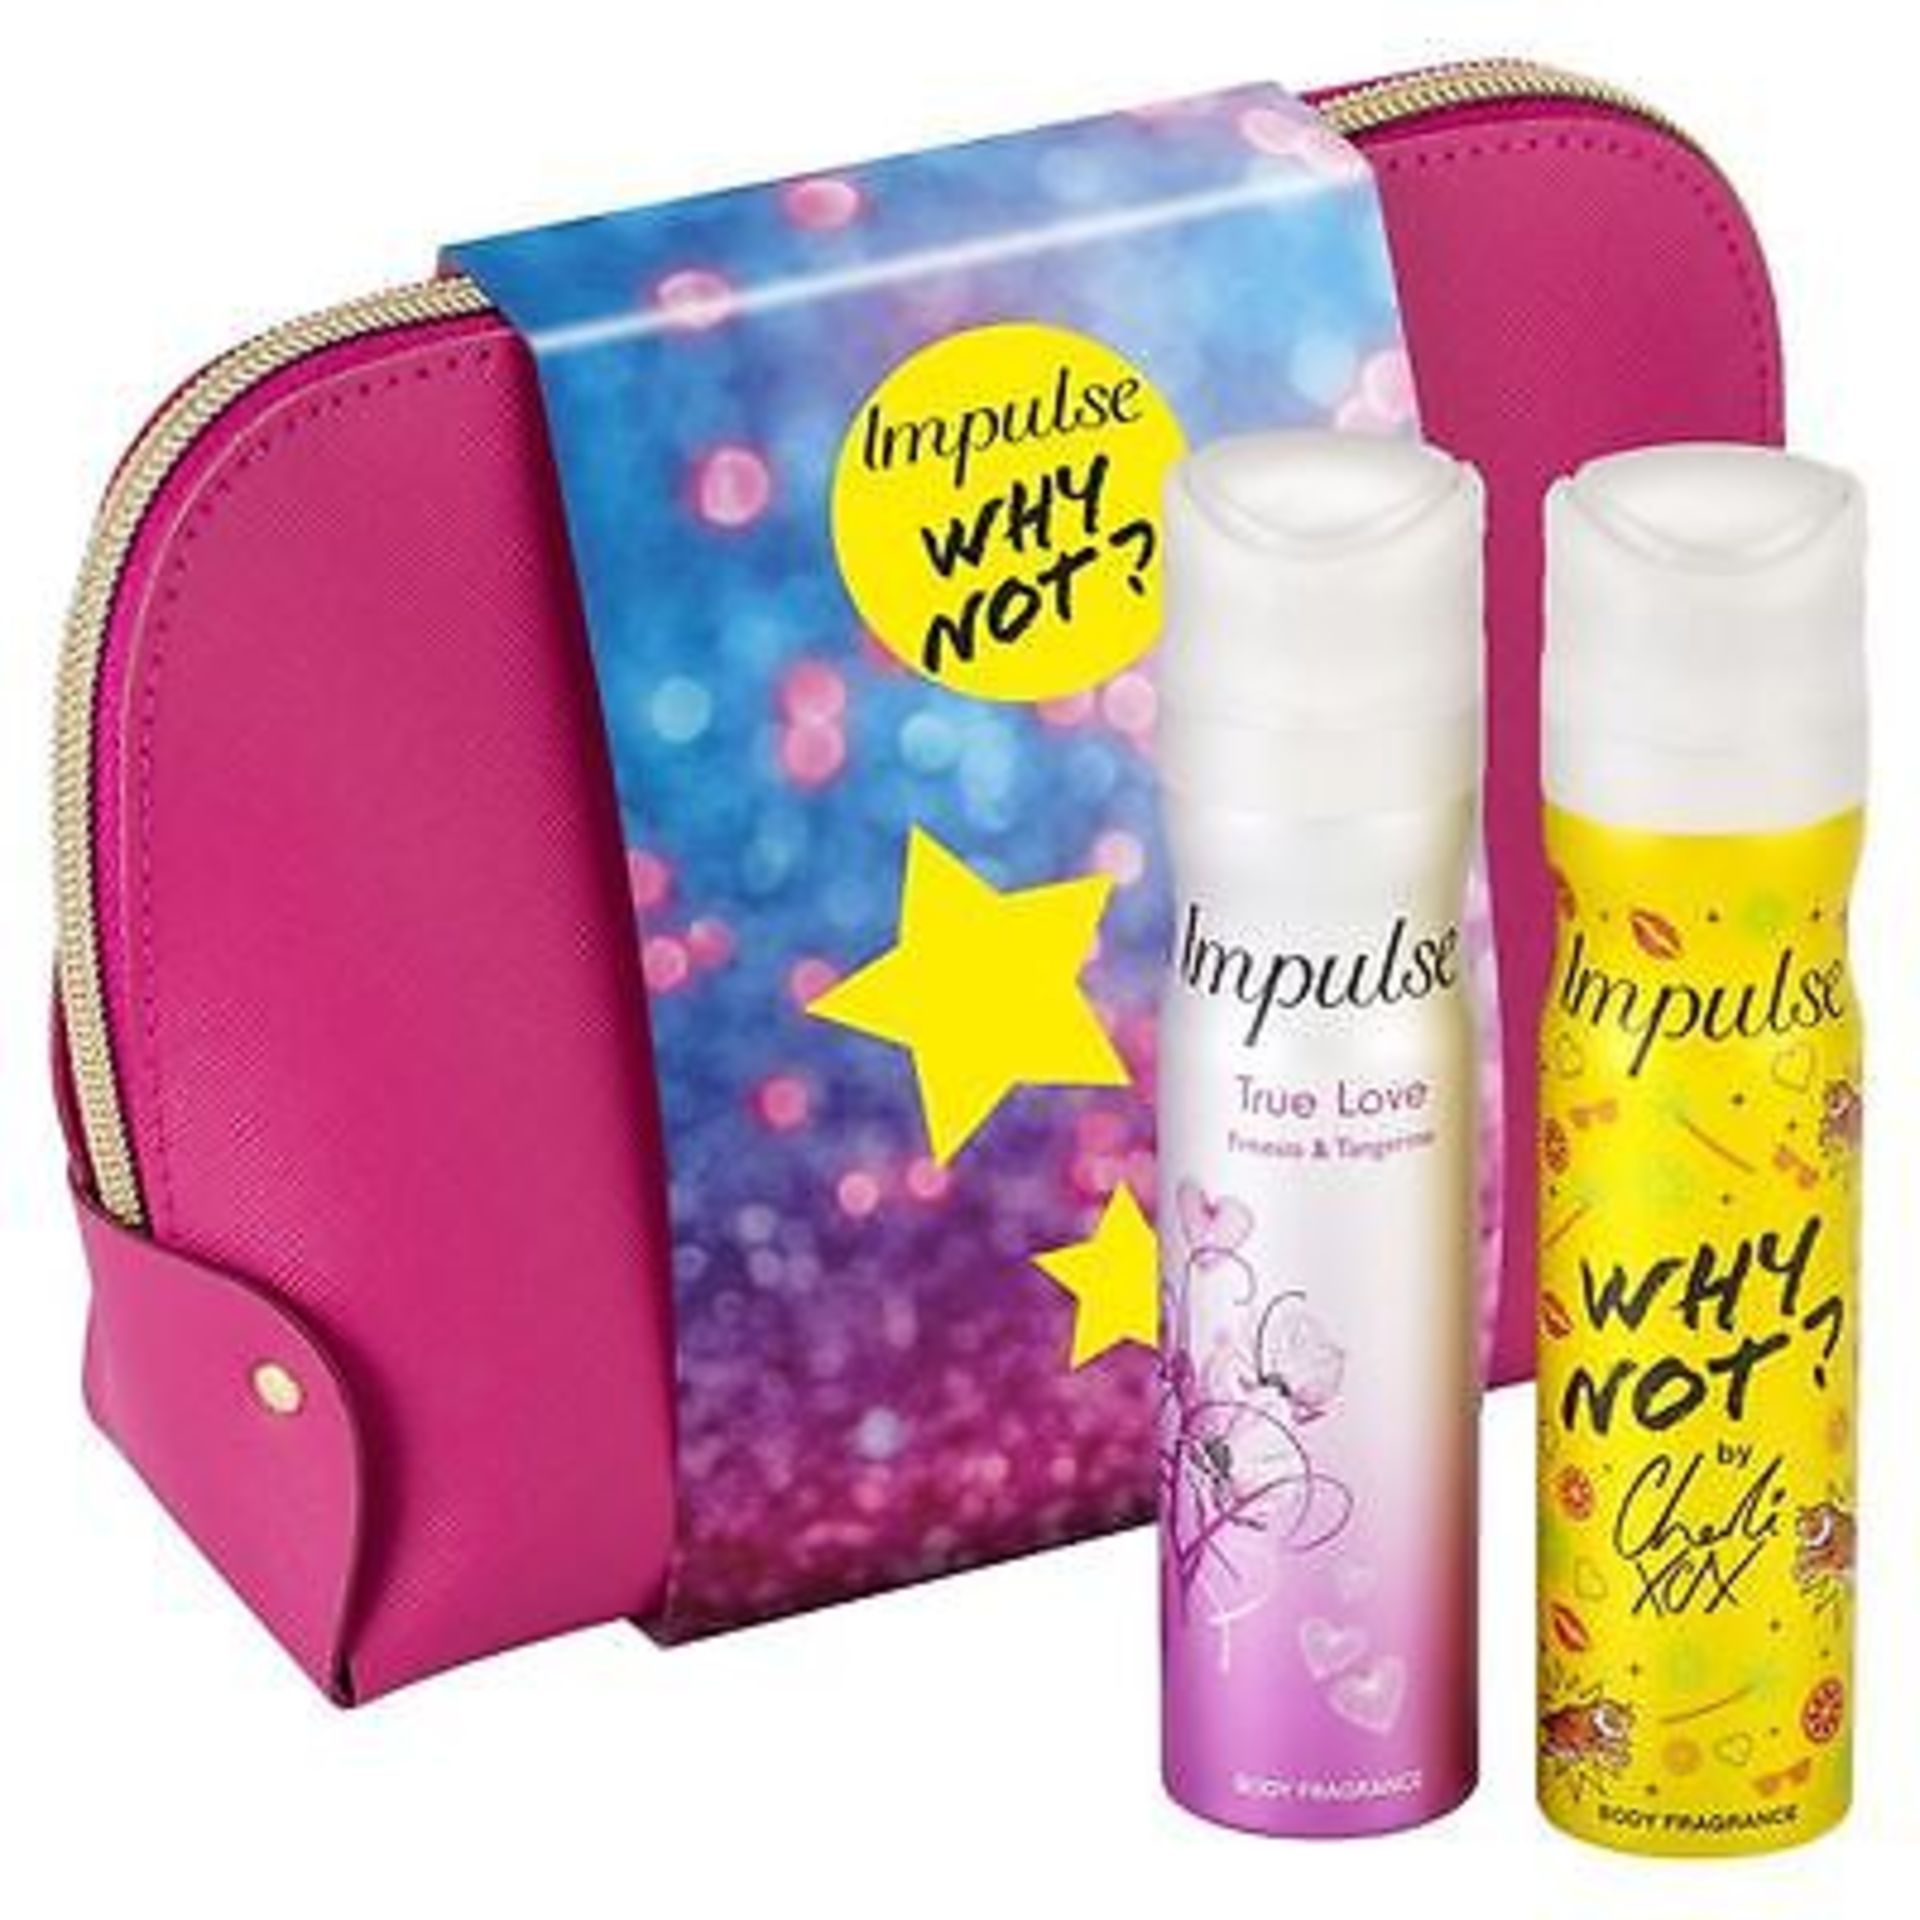 + VAT Brand New Impulse Why Not Body Fragrance Gift Set Amazon Price £12.20 - Ebay Price 9.99